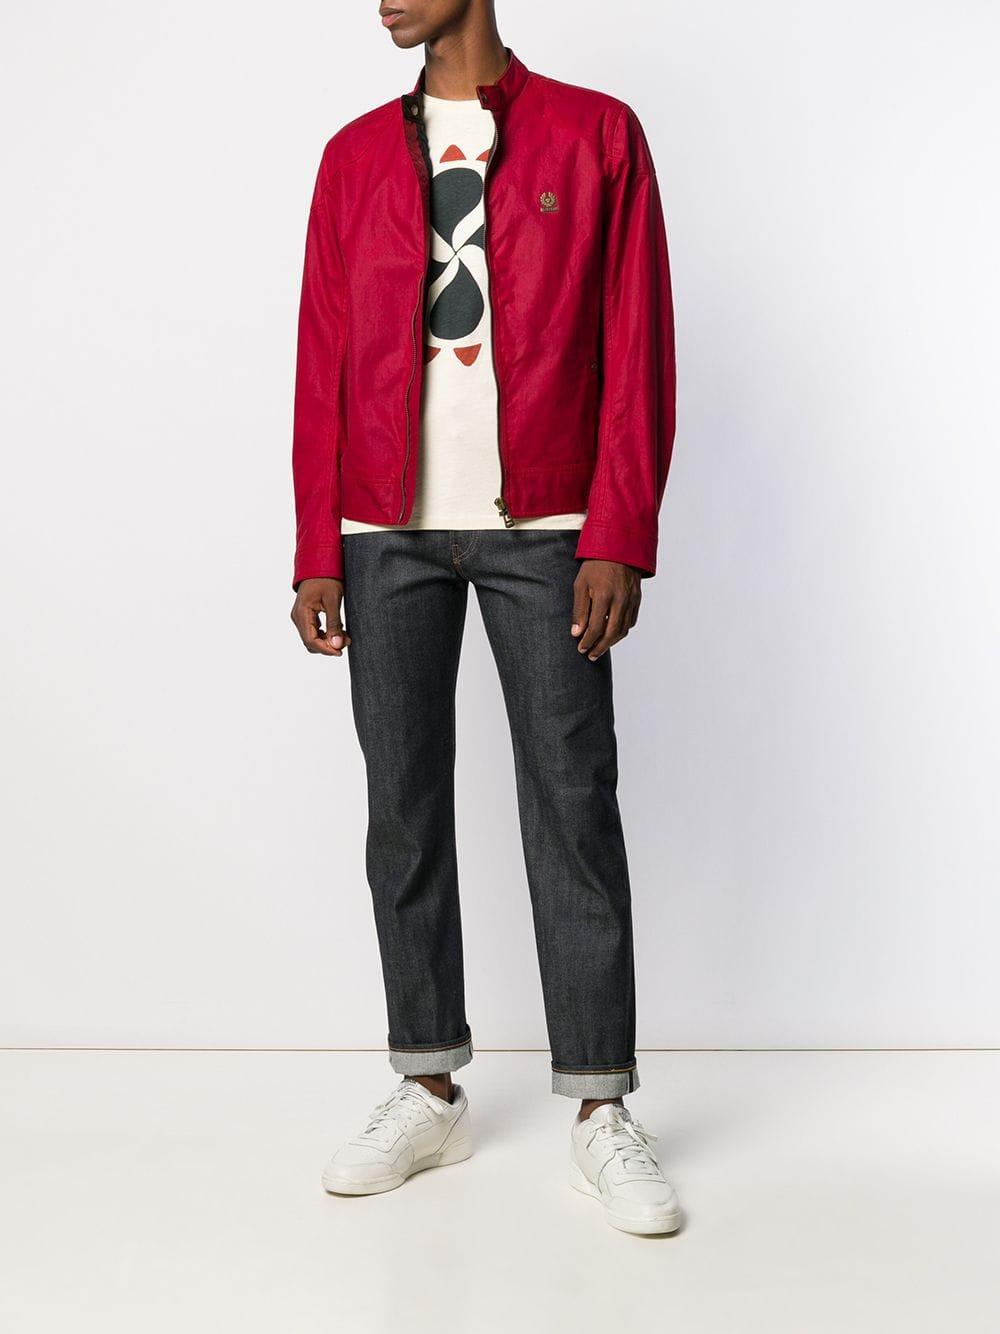 Belstaff Synthetic Kelland Zip Up Jacket in Red for Men - Lyst